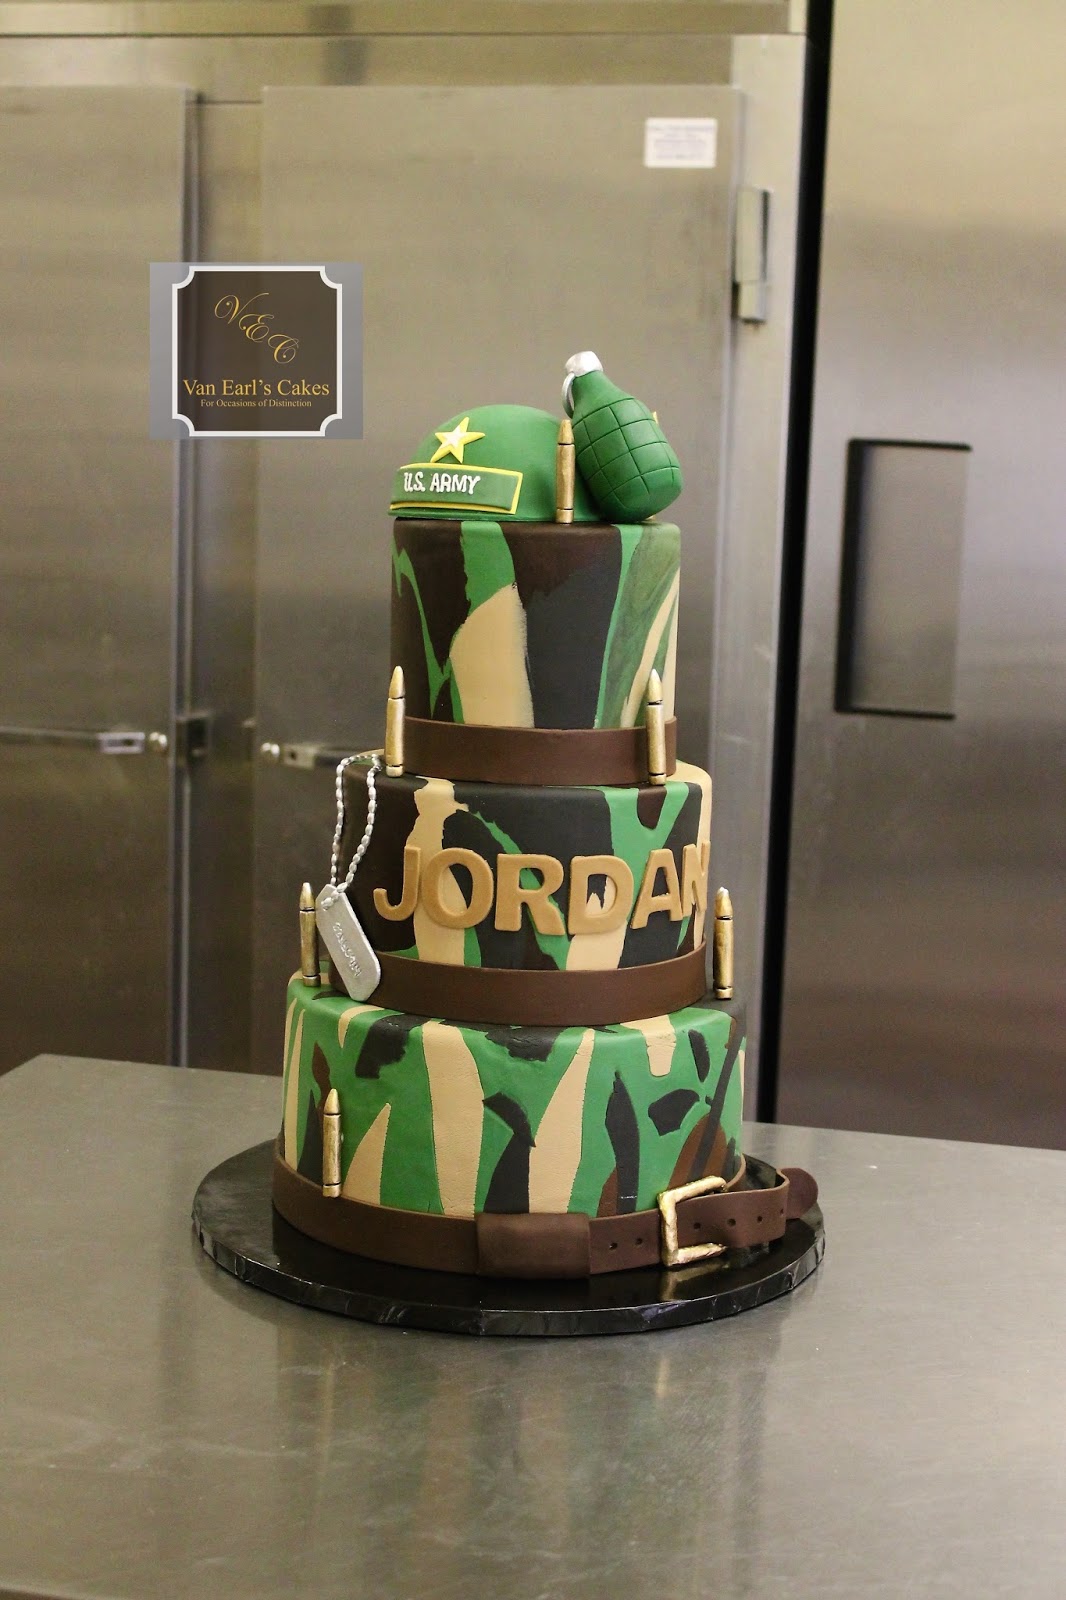 Van Earl's Cakes: Army Sergeant Theme Birthday Cake